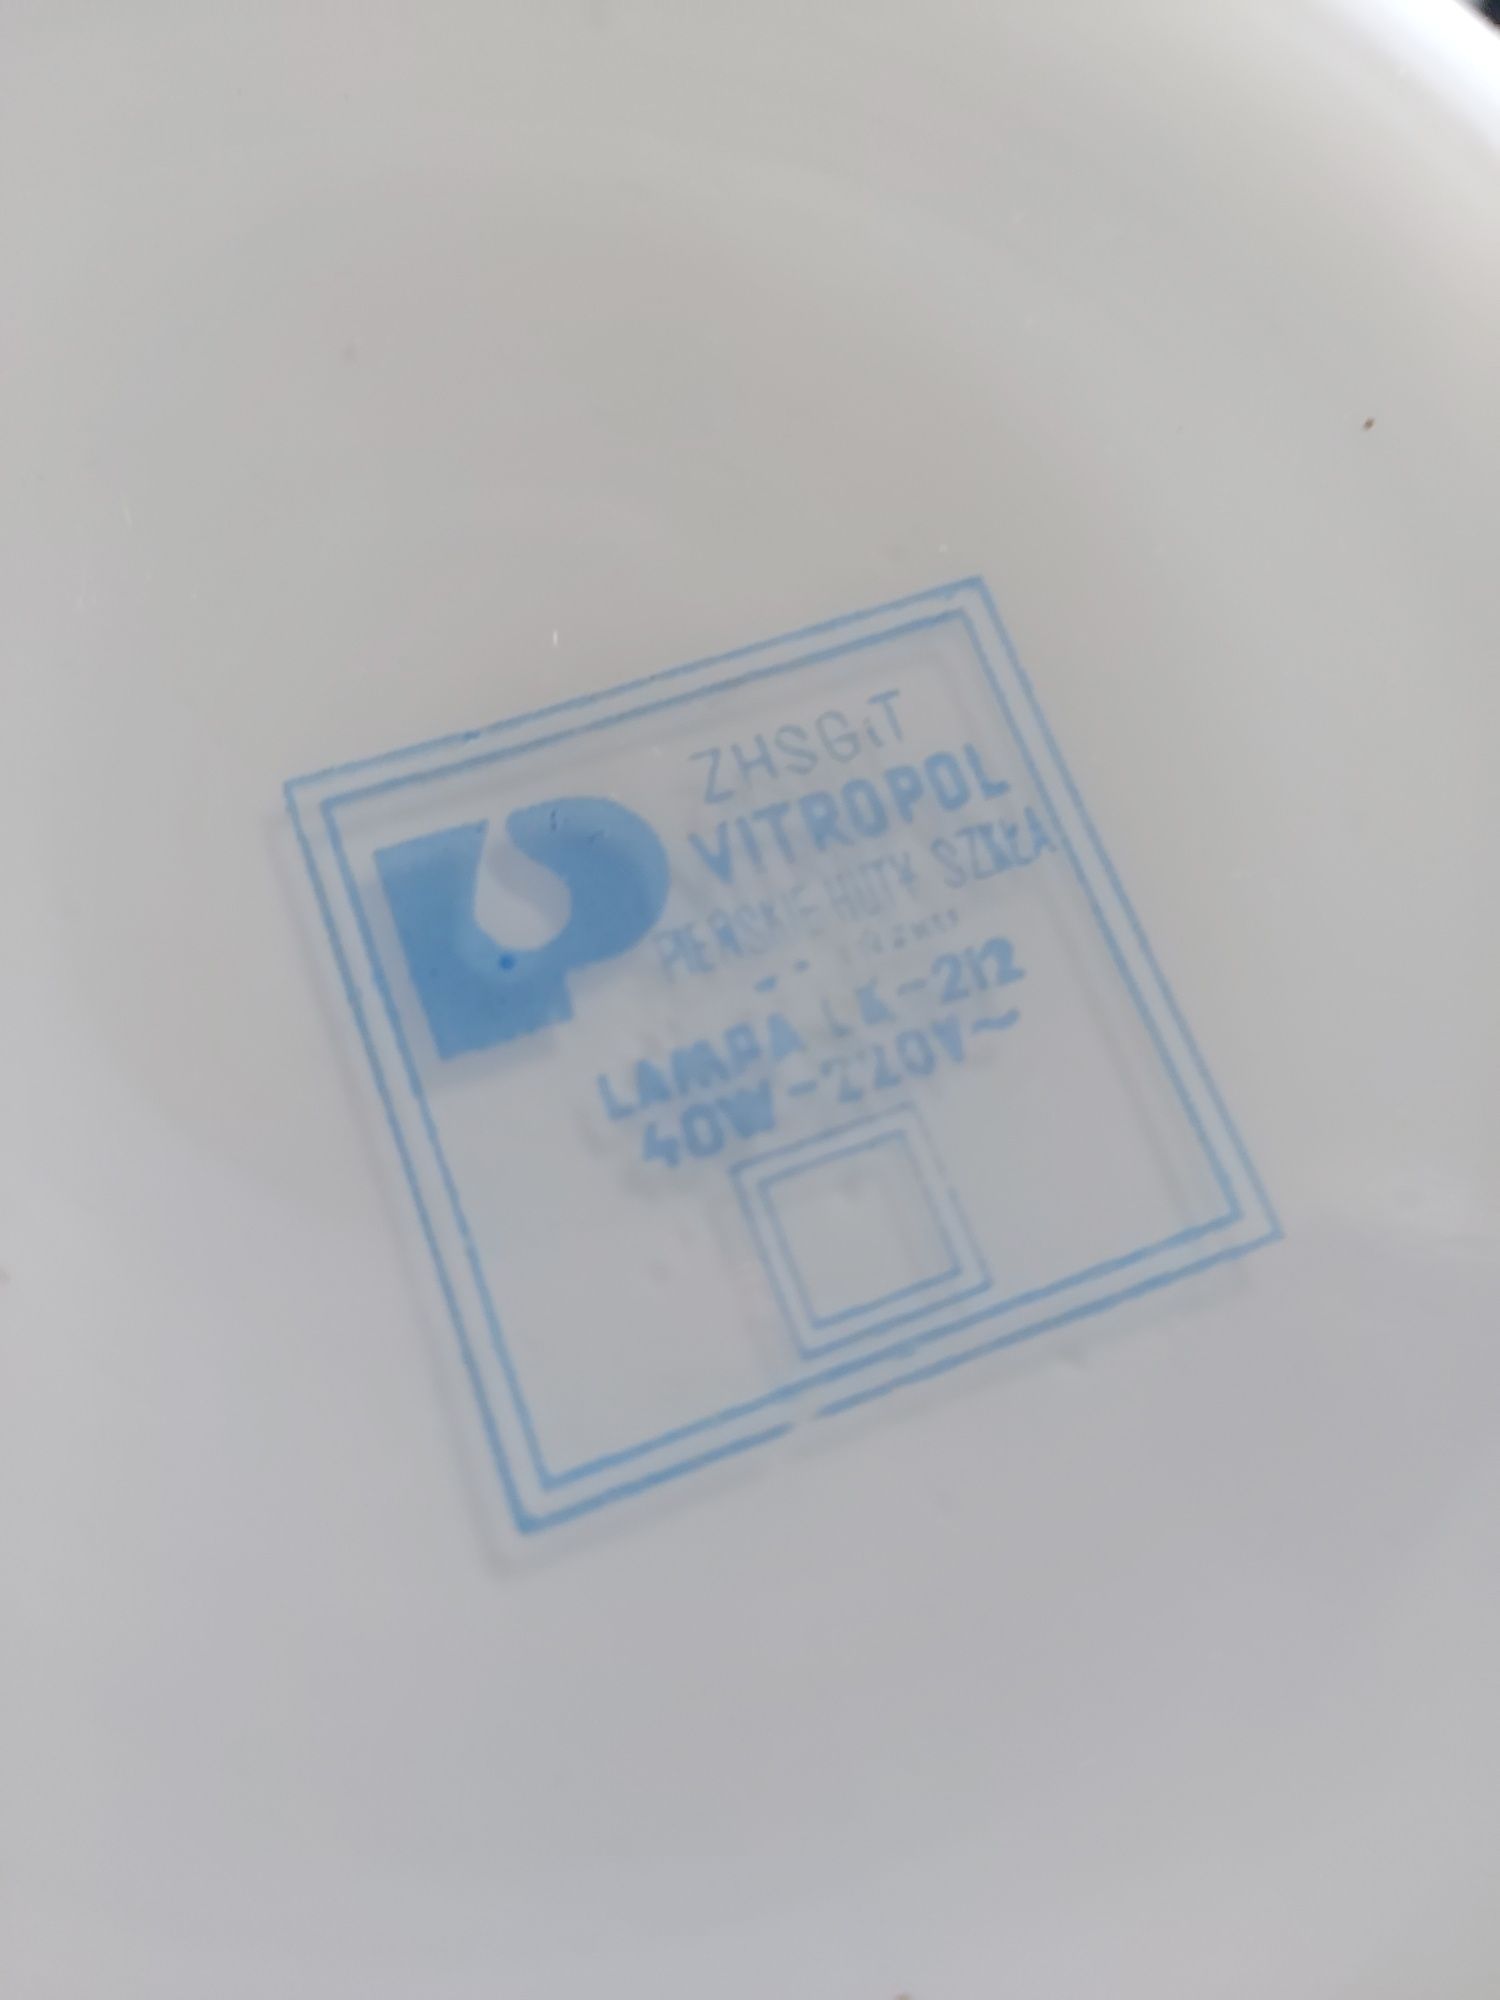 Lampa szklana PRL TAŃCE Stryjeńska vitropol